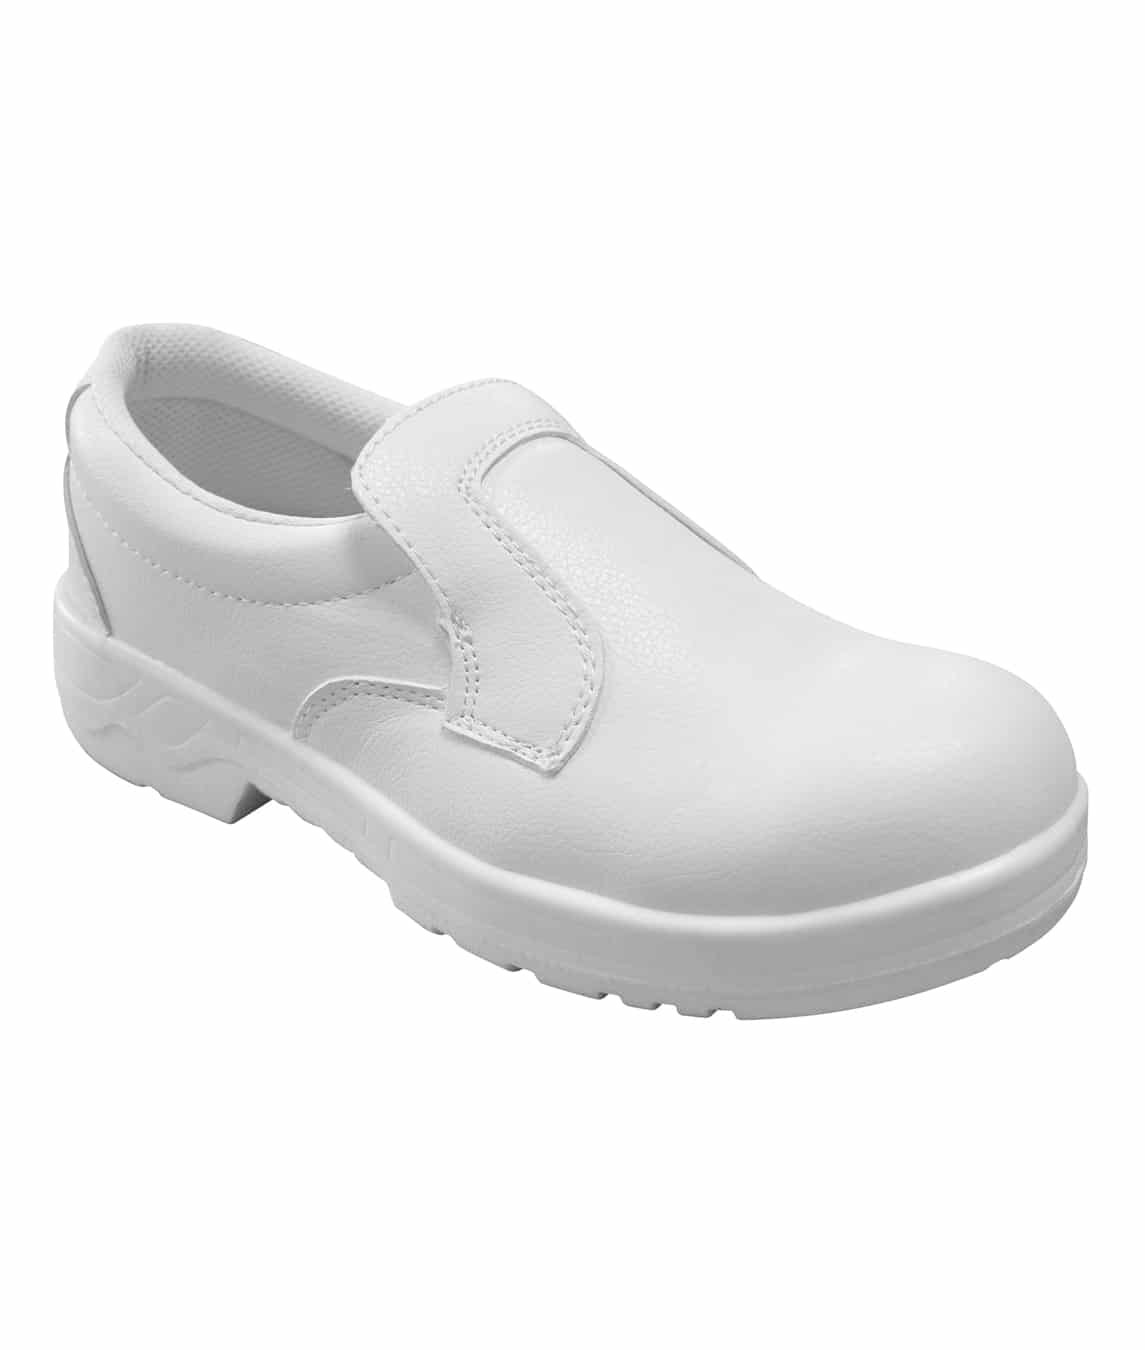 So Safe Hygiene Slip-On Shoe | Industrial Workwear